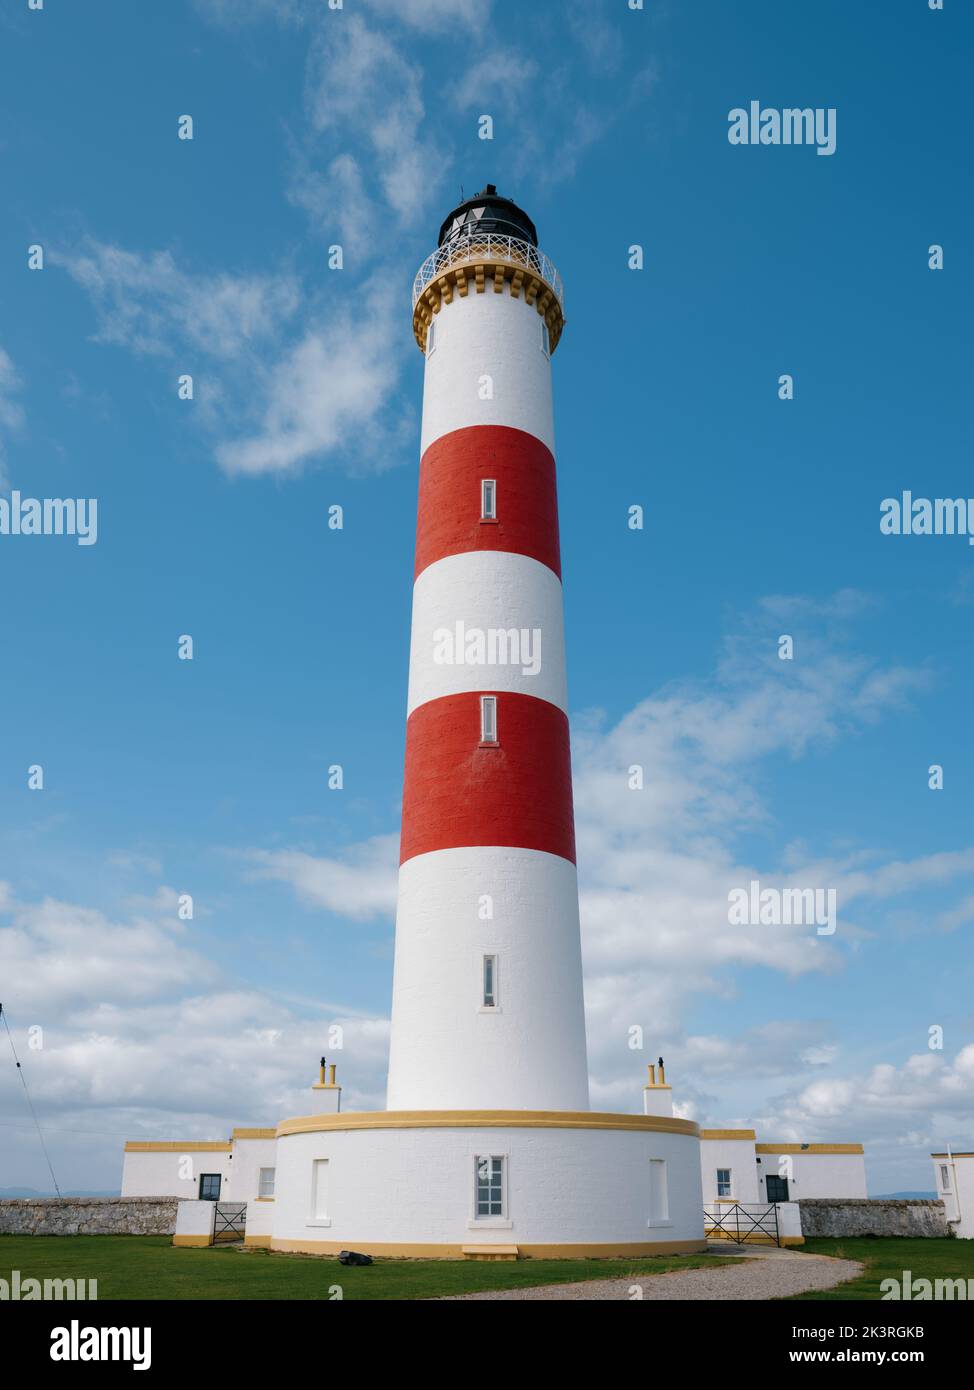 The red and white striped Tower Tarbat Ness Lighthouse, Tarbat Ness, Tain & Easter Ross, Cromartyshire, Scotland UK Stock Photo